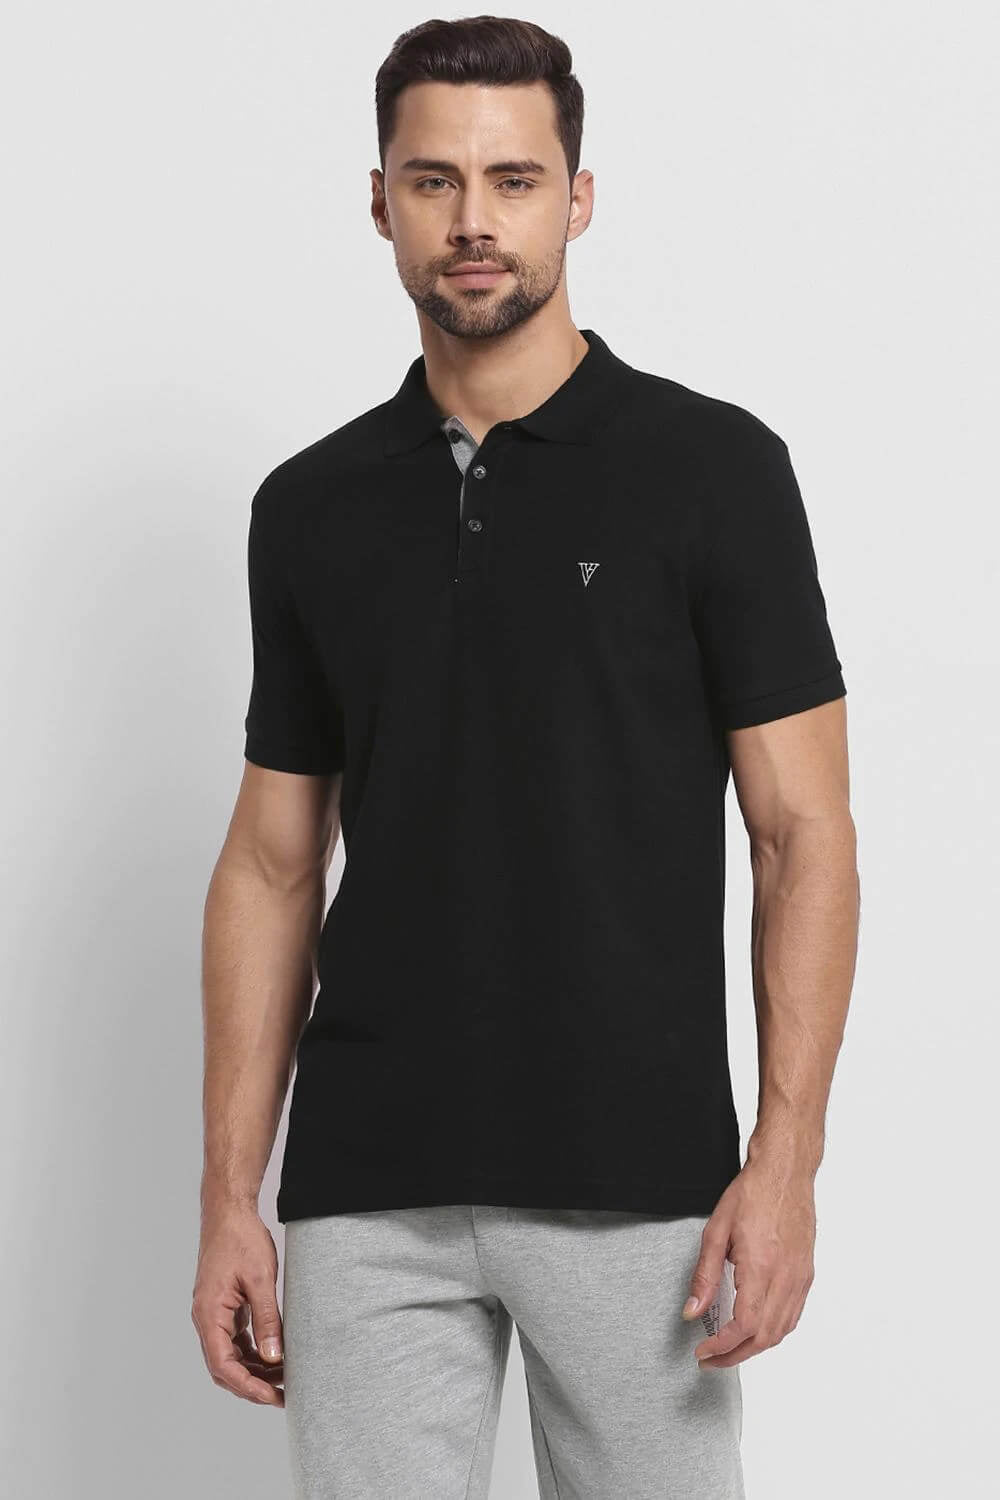 Van Heusen Black Polo Tshirt for Men #60032